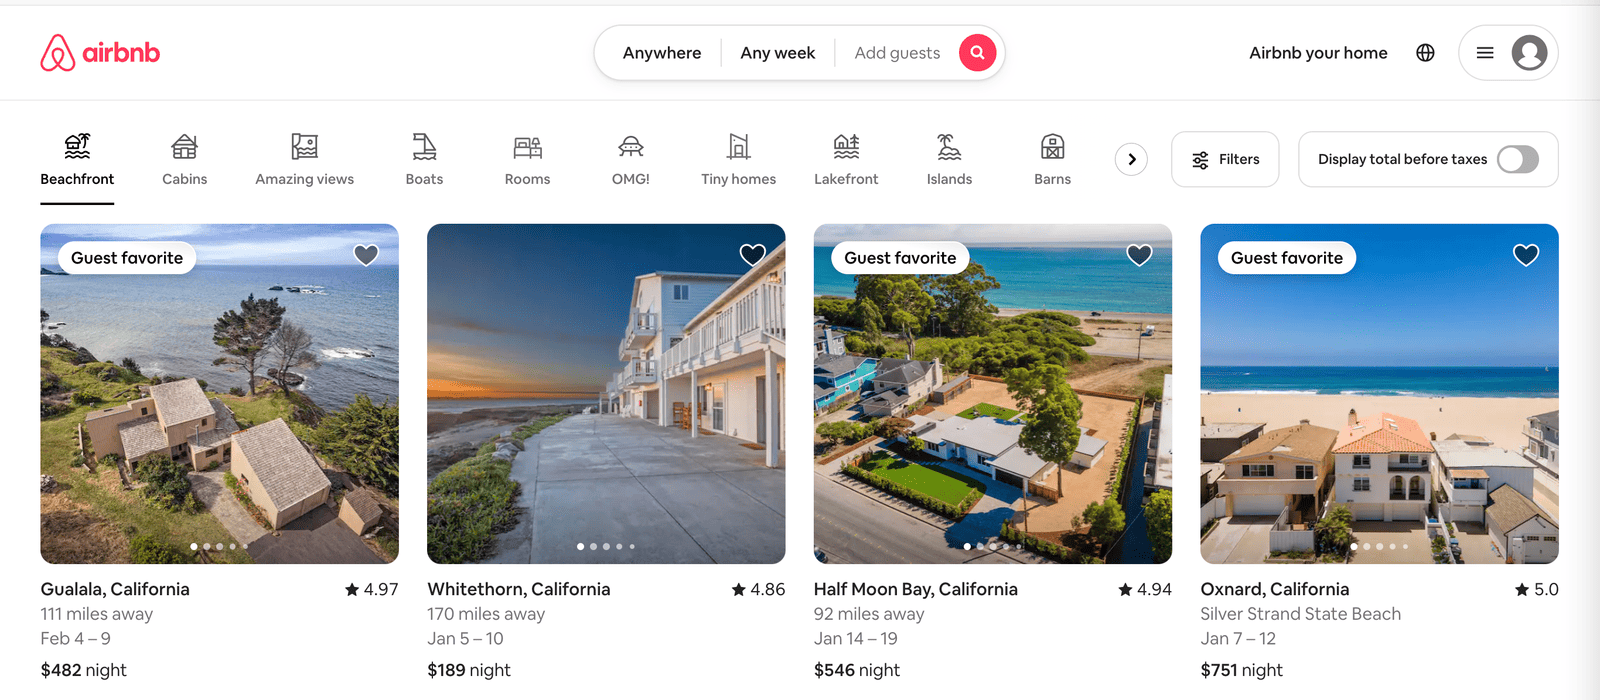 best travel nurse housing site, airbnb homepage